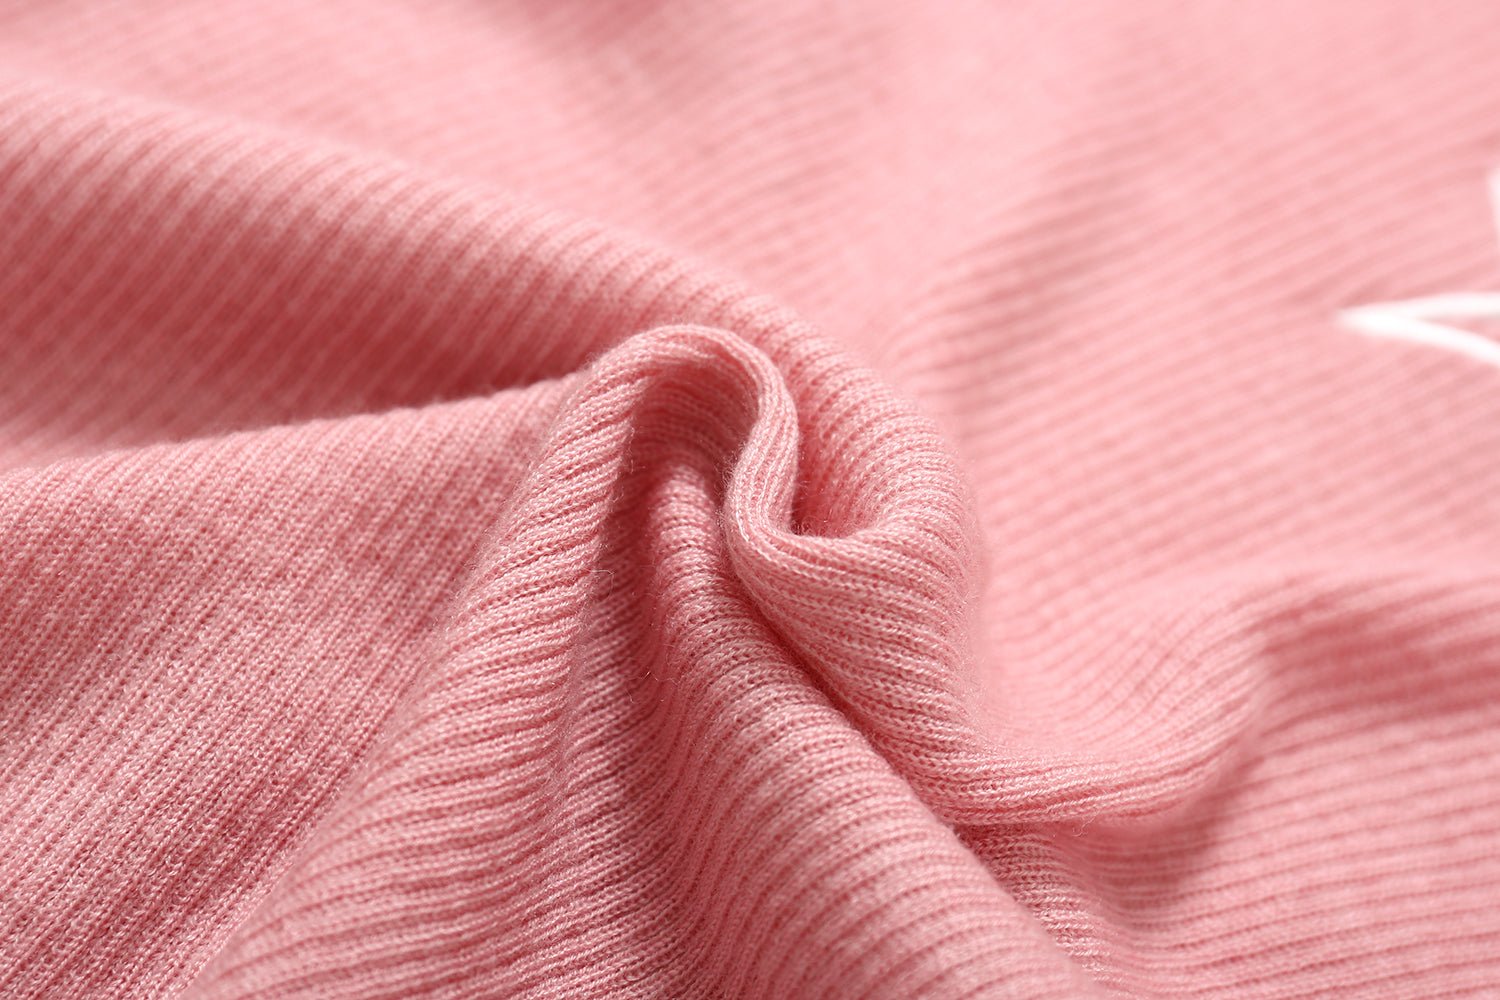 SOMESOWE Pink Stitched Star Bottoming Shirt | MADA IN CHINA